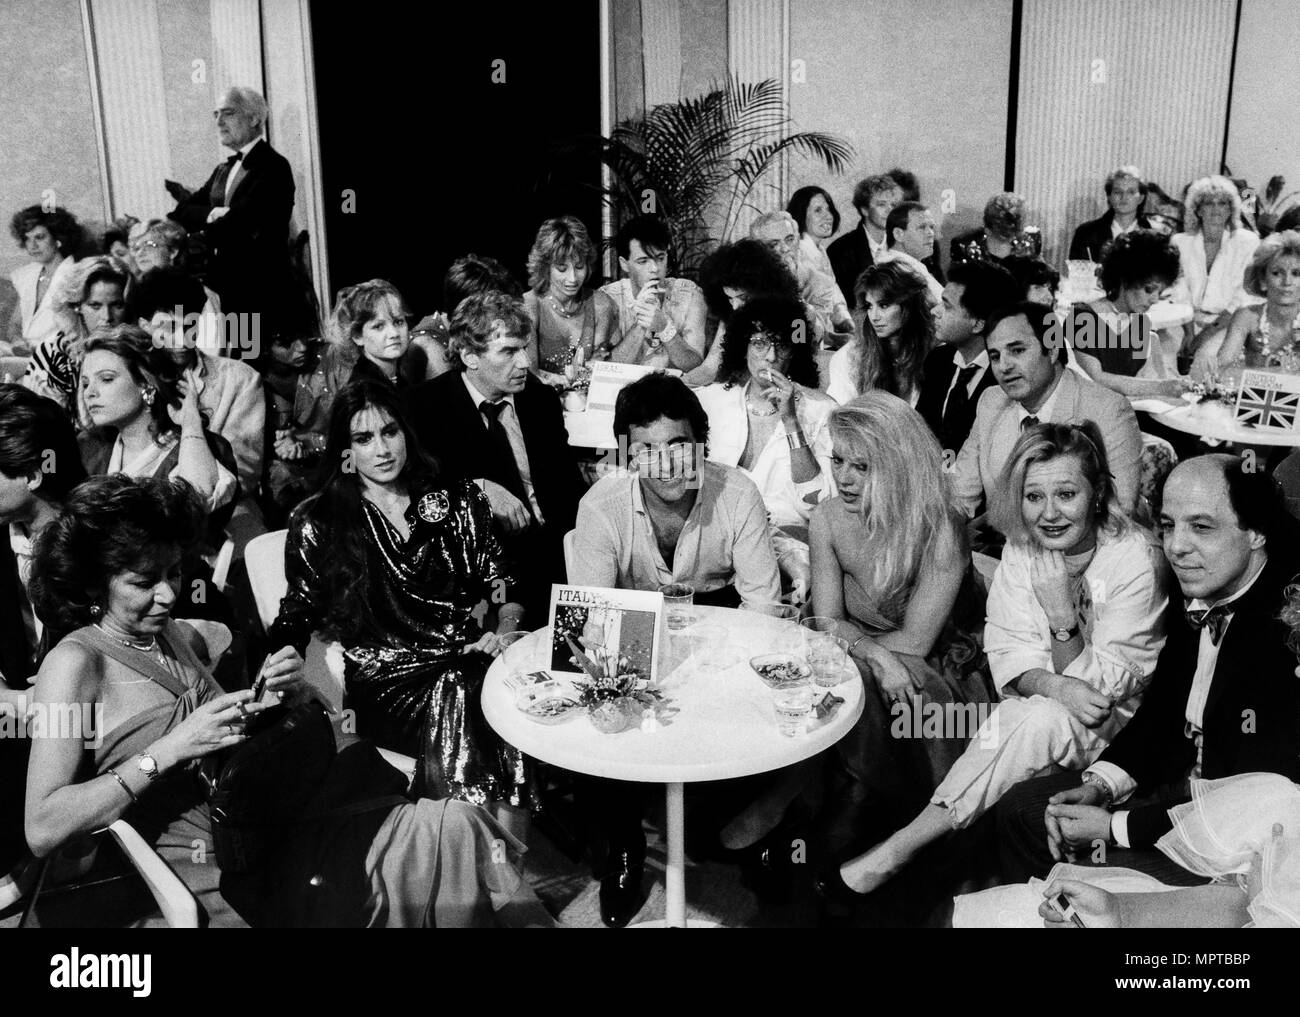 al bano, romina power, eurovision song contest, goteborg, 1985 Stock Photo